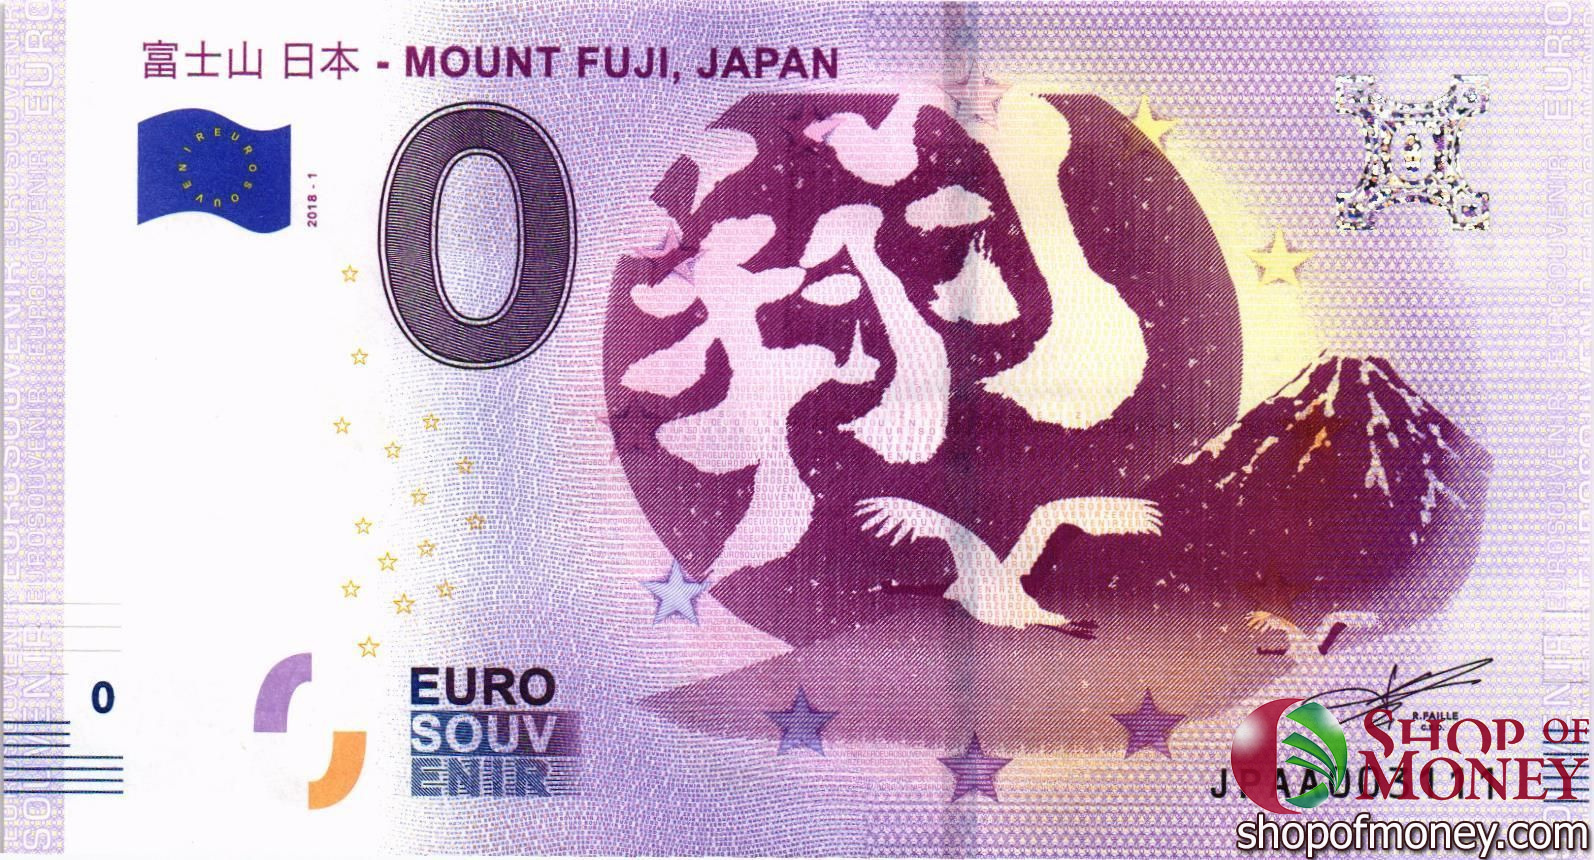 MOUNT FUJI, JAPAN 0 ЕВРО